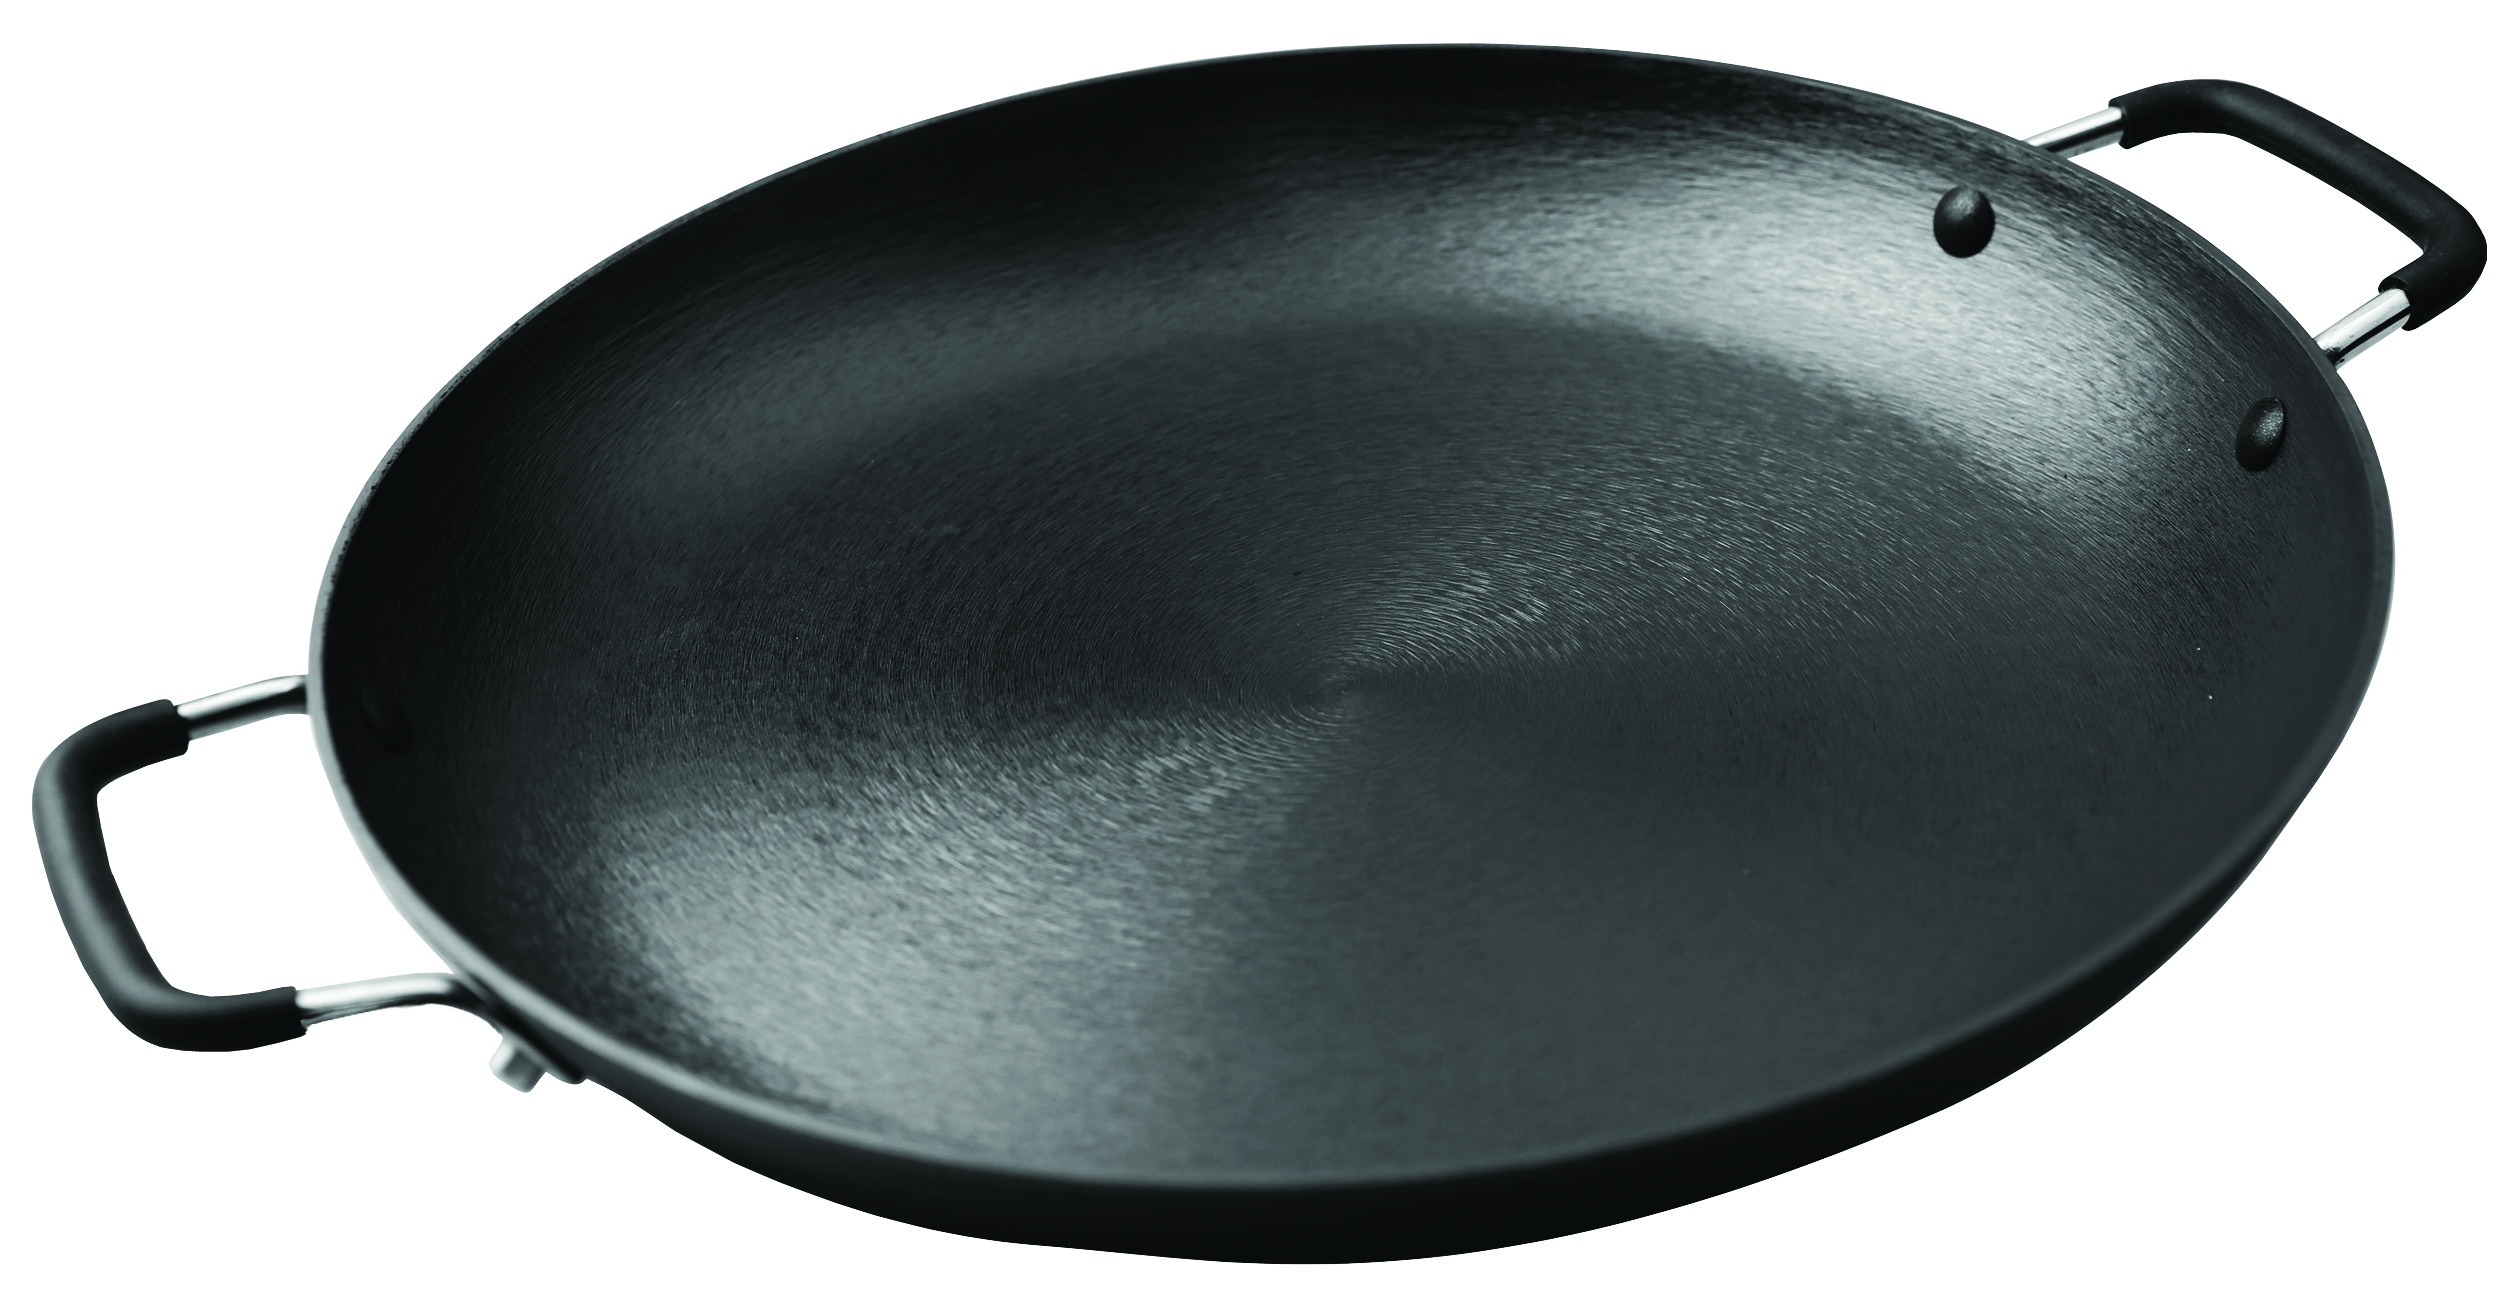 ULO Paella Fry Pan 36 cm 105580